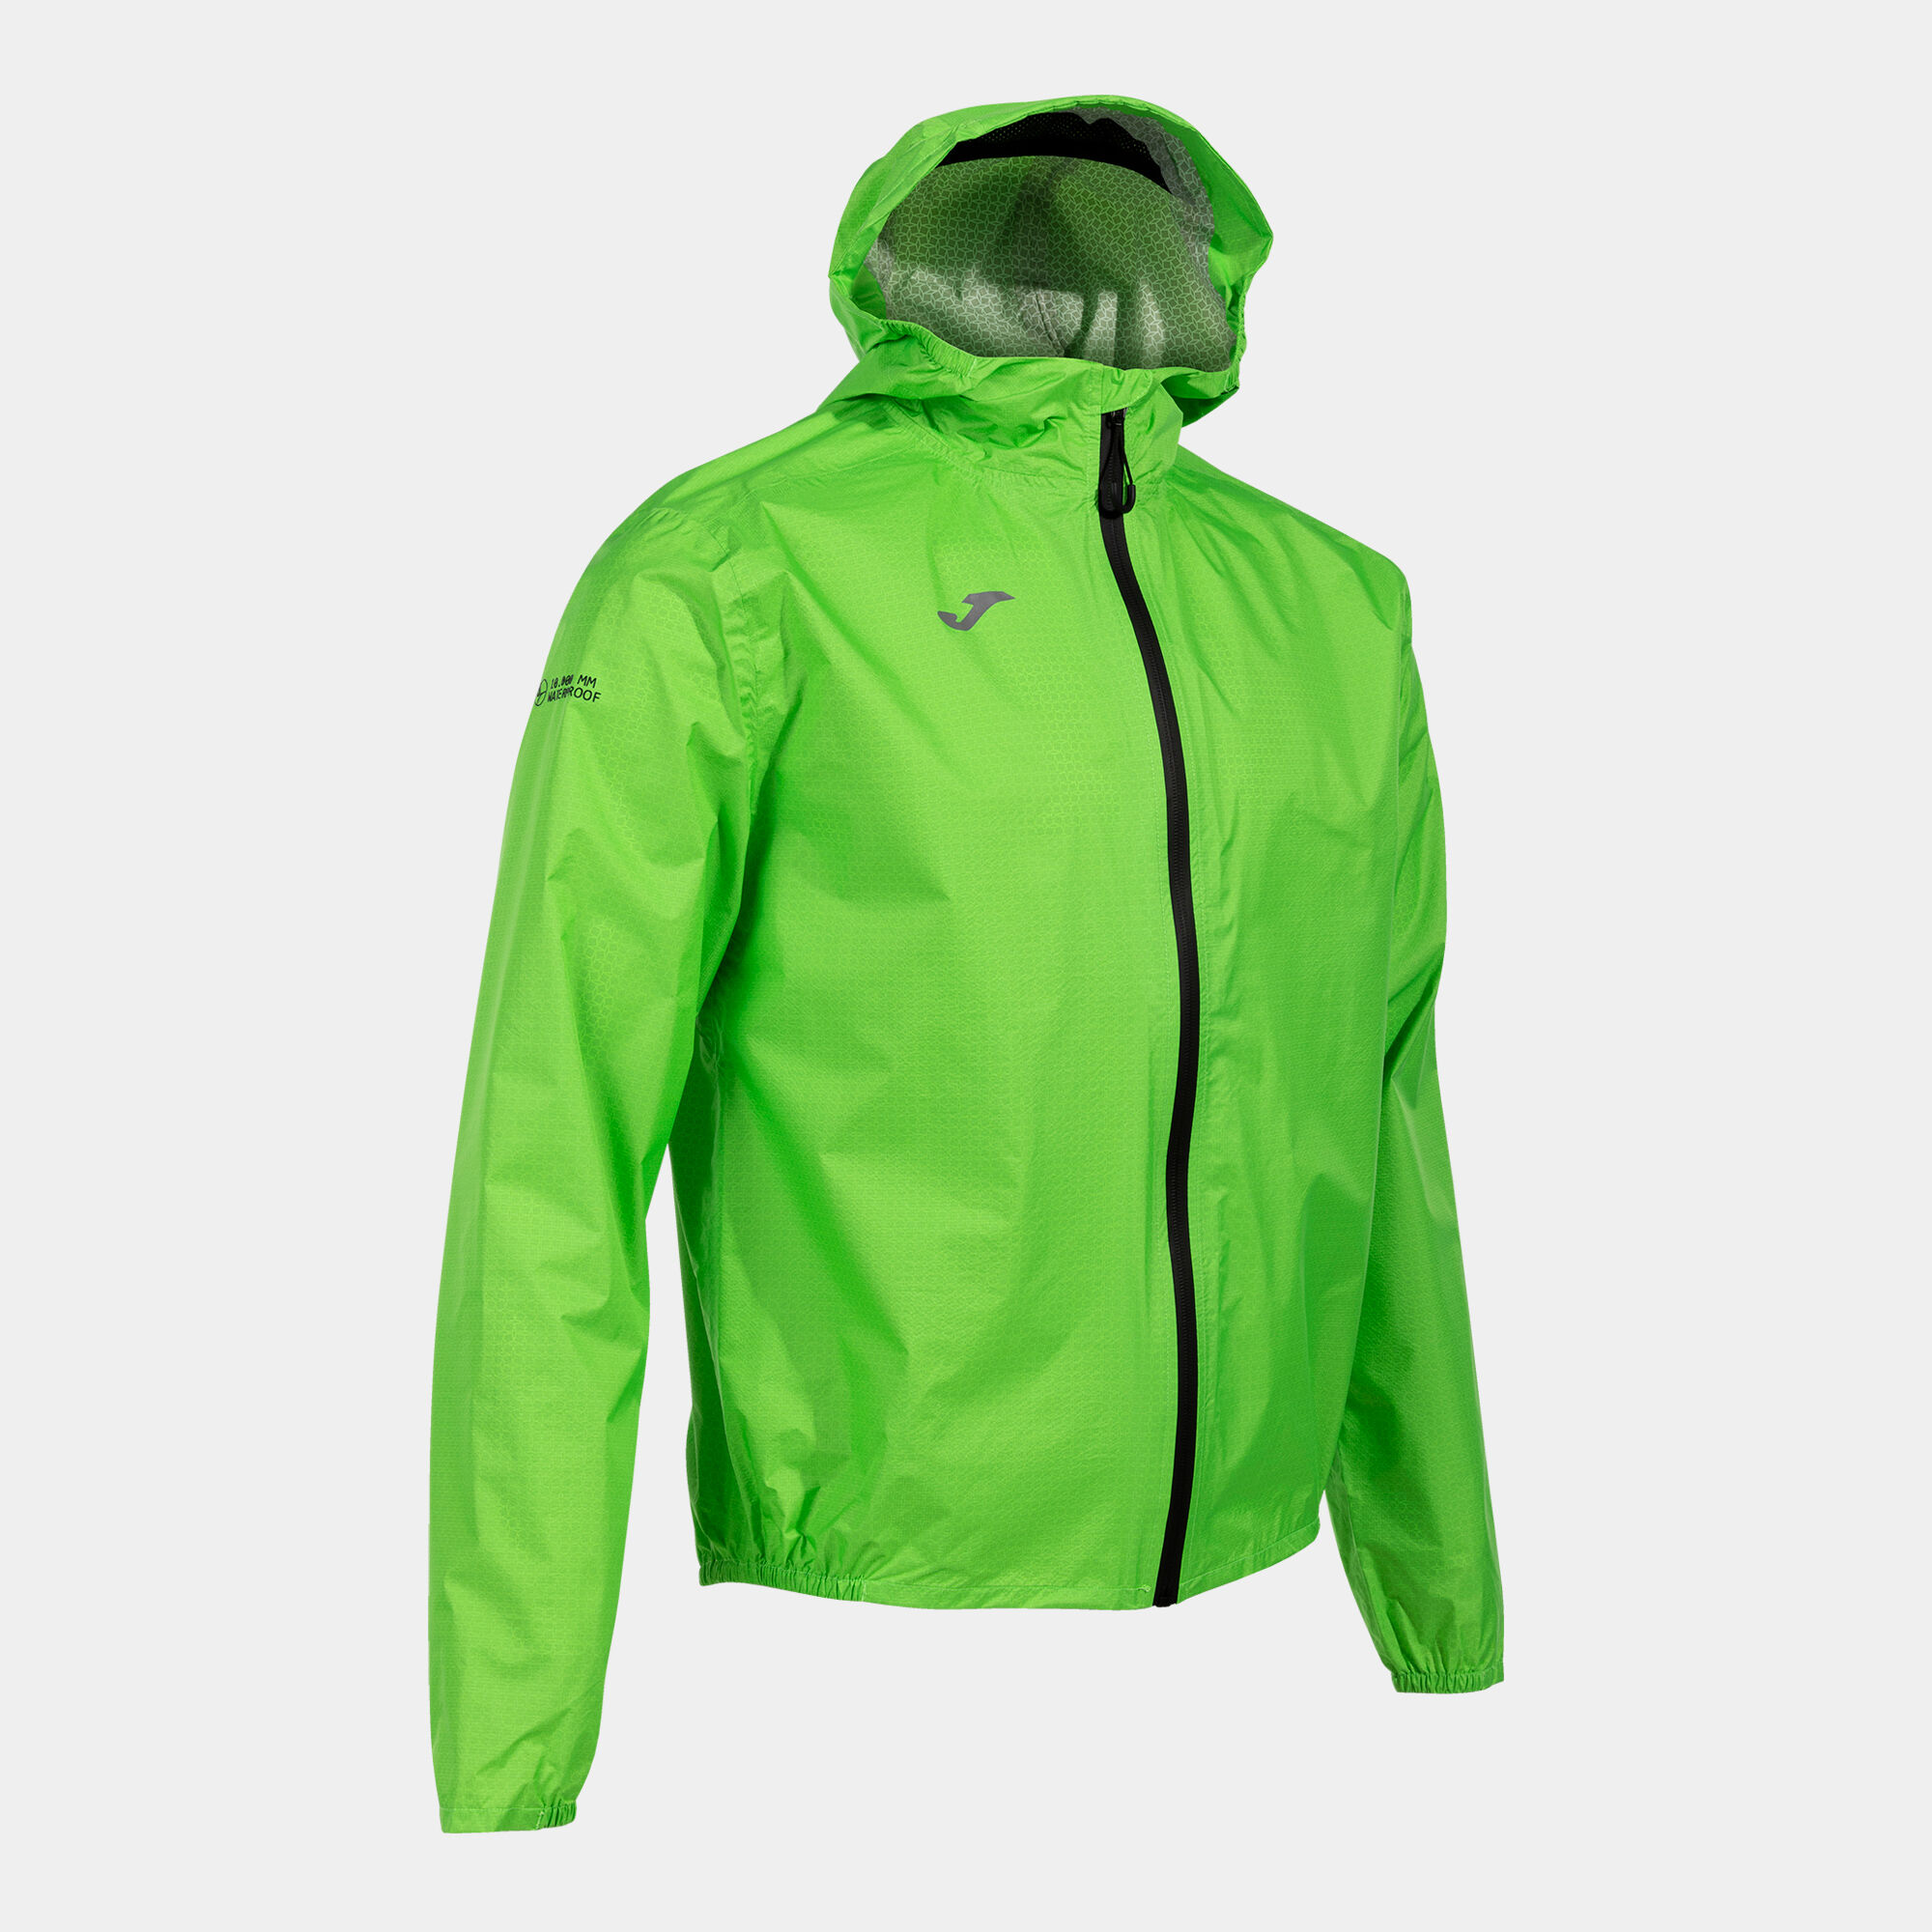 Rainjacket man R-Night Iconic fluorescent green